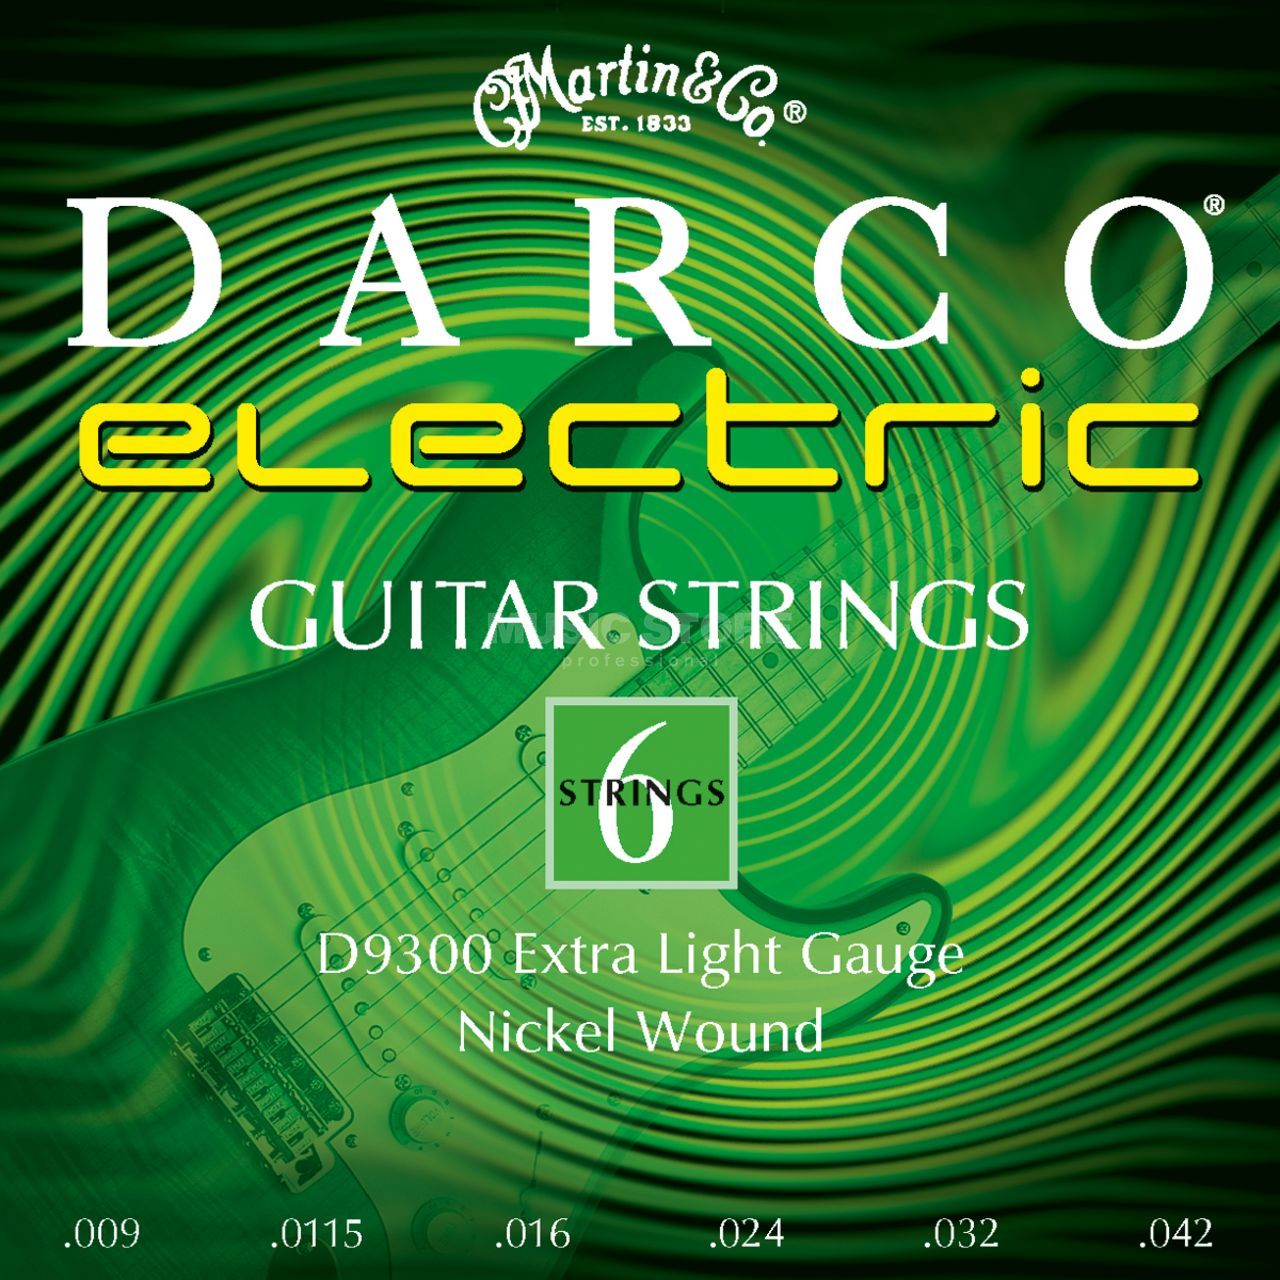 Martin & Co Darco® D9300 9-42 Extra Light Gauge Nickel Wound Electric Guitar String Set